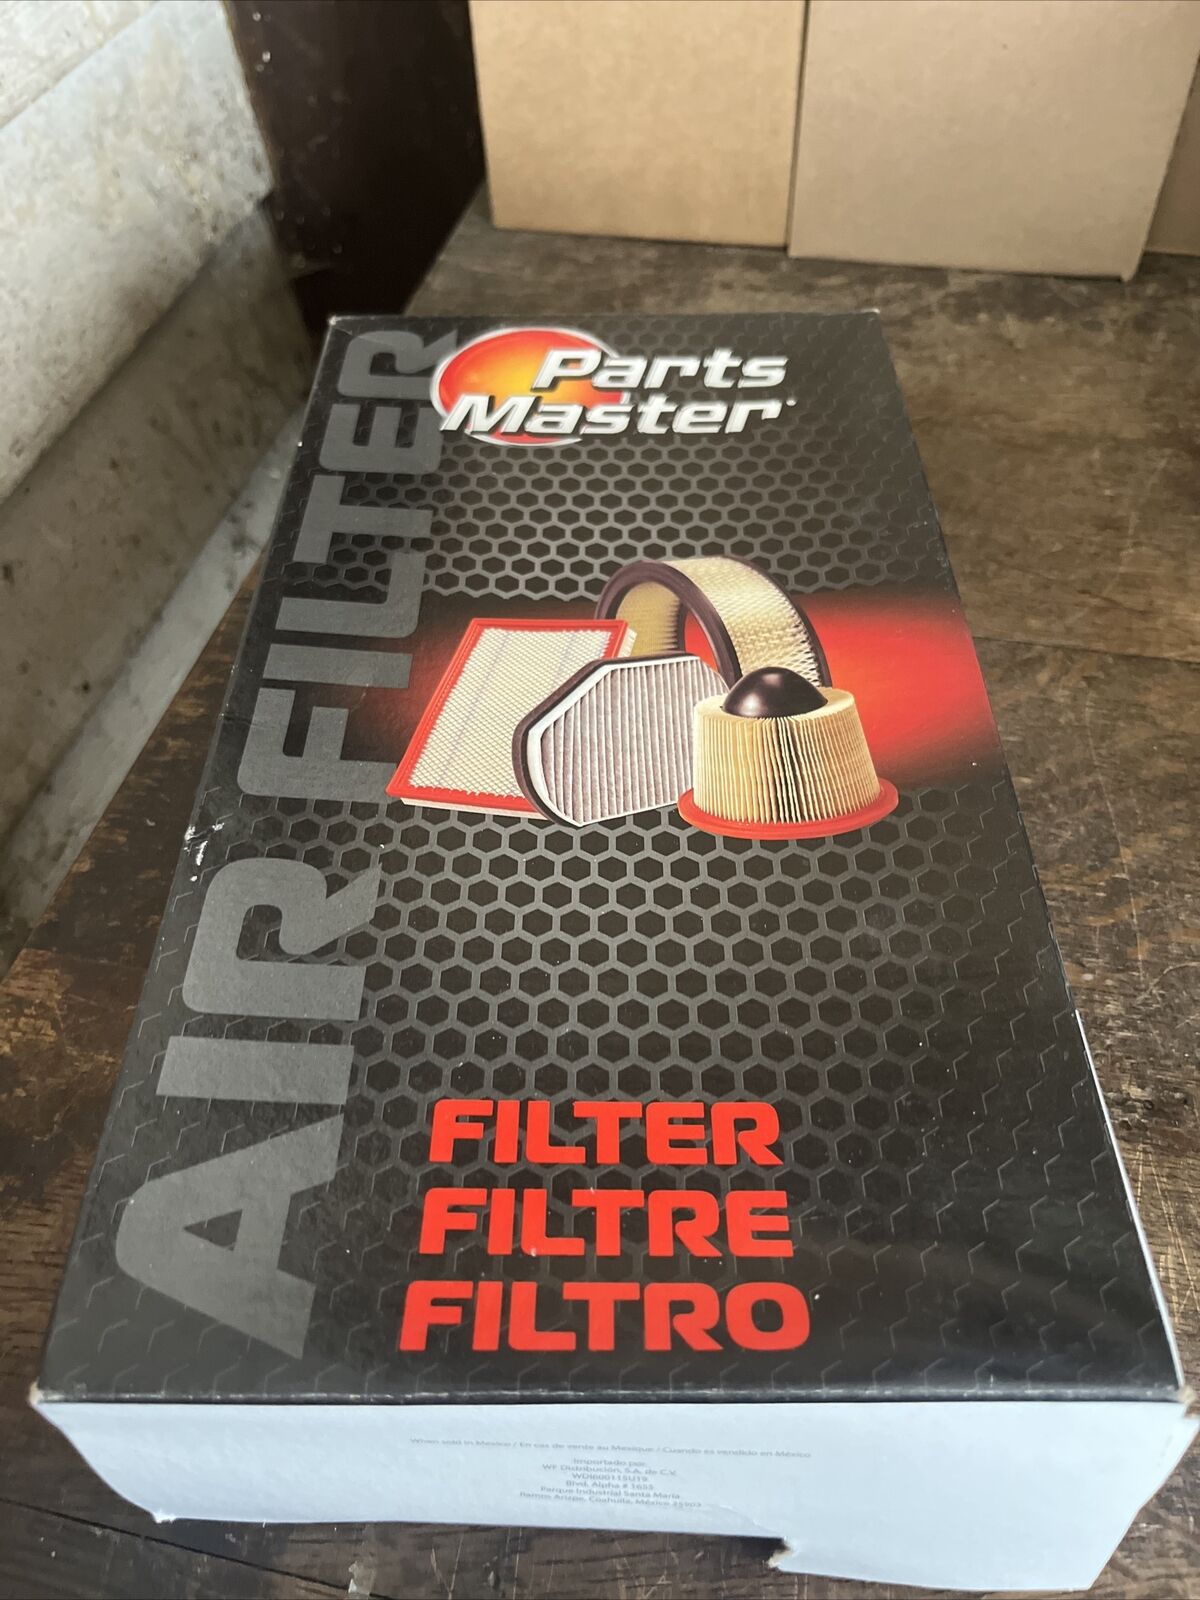 NOS Parts Master Air Filter  62524 Same As Wix 42524